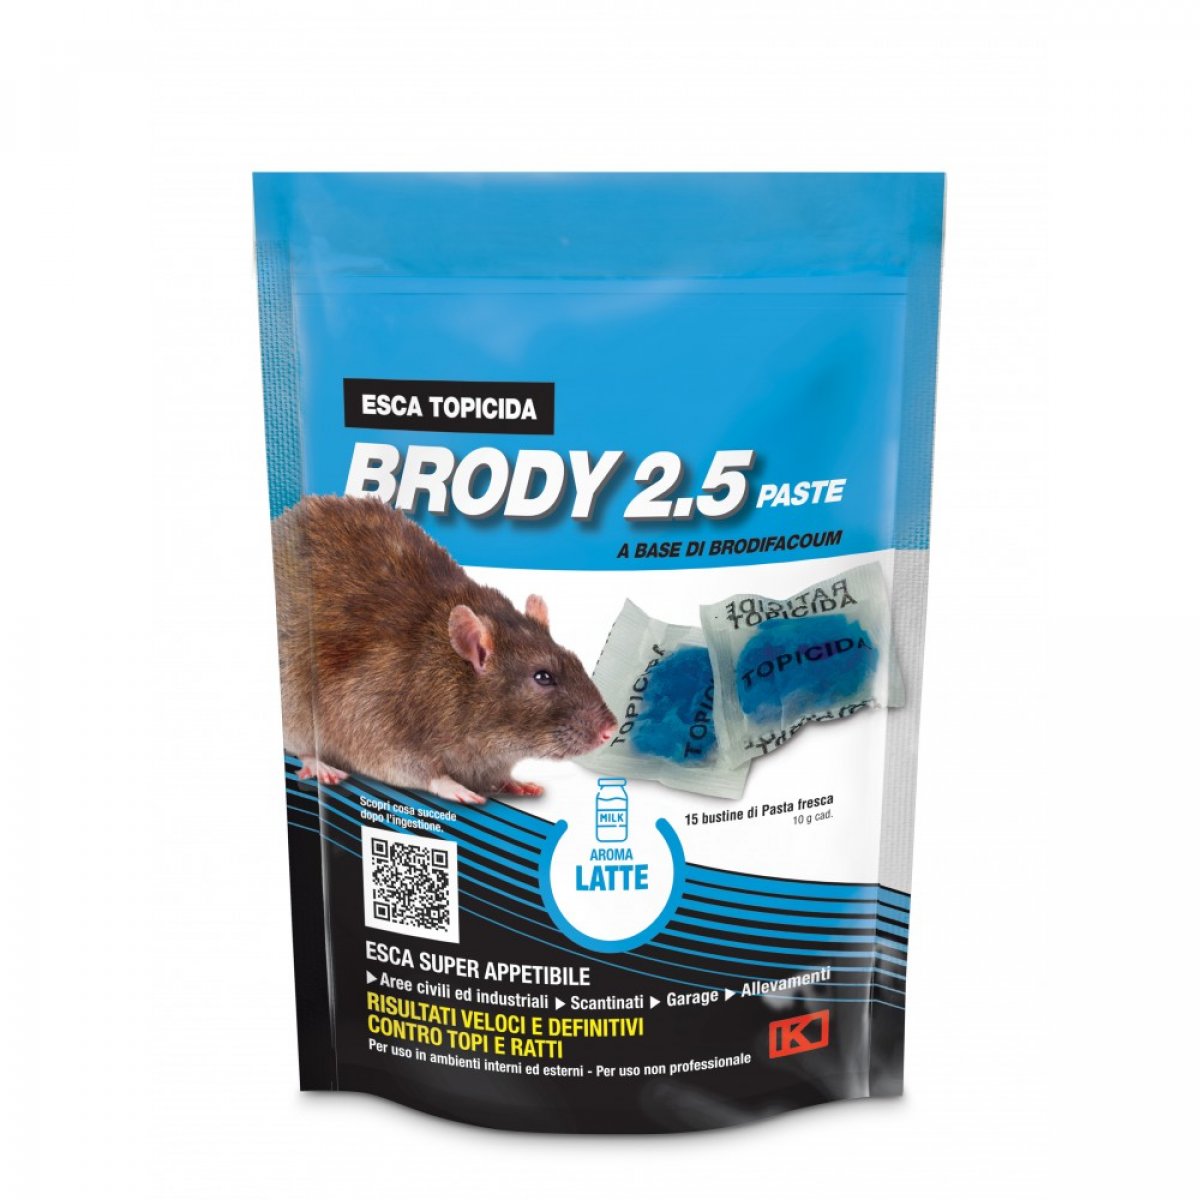 Veleno Topicida Brody 2.5 esca BLU aroma Latte doyppack 150g kollant